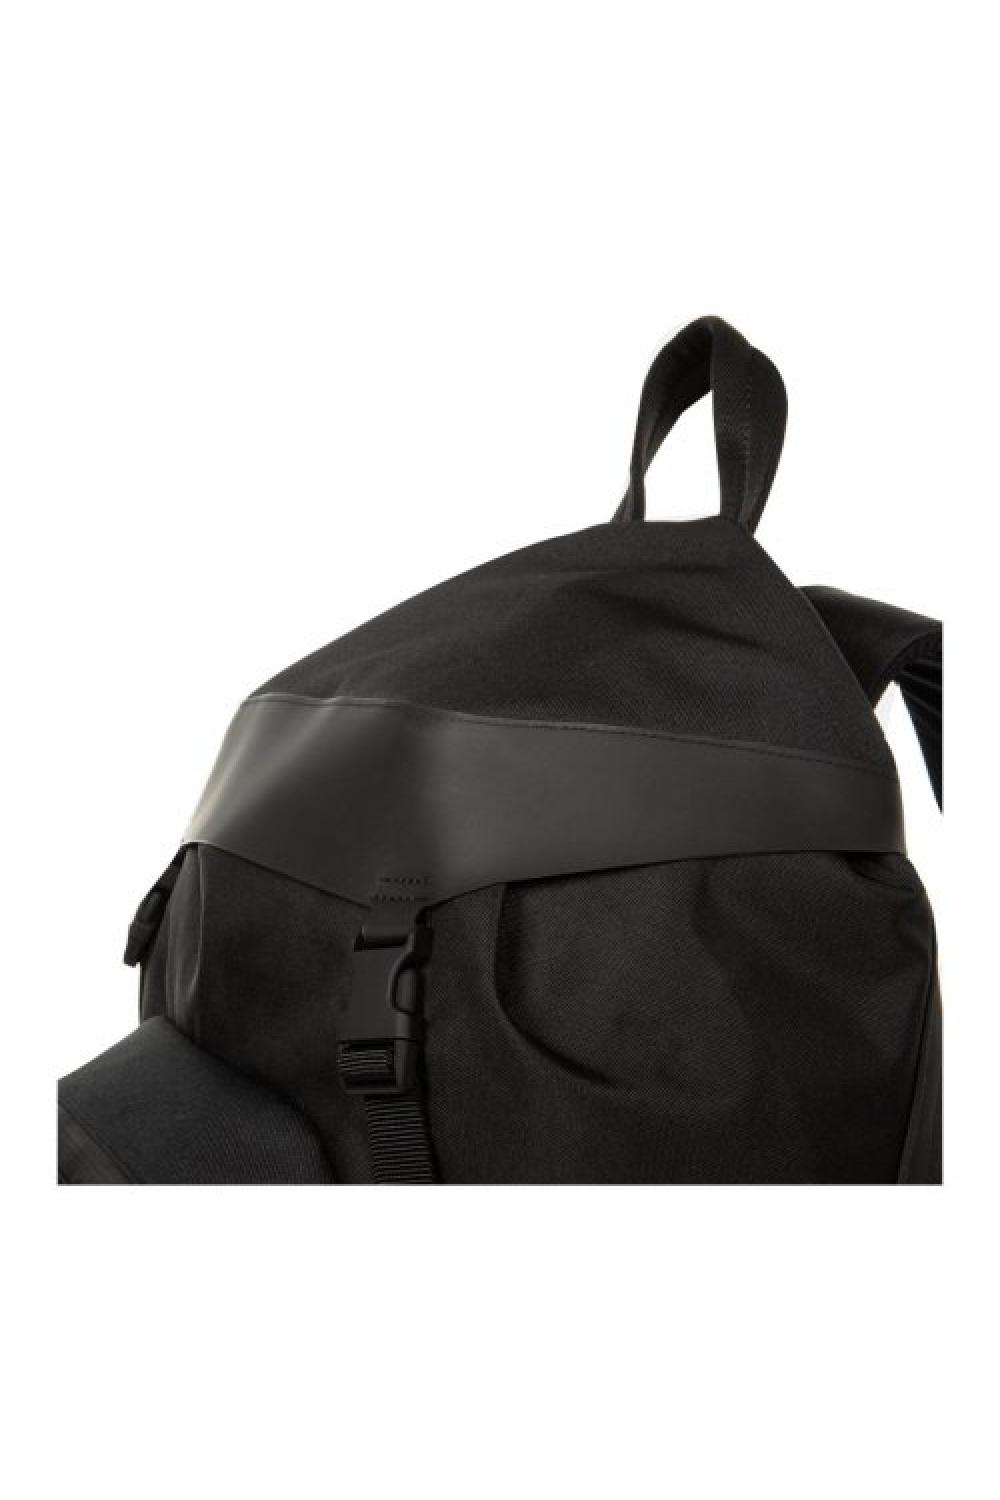 EASTPAK x Neil Barrett Backpack Topload (20 Liter) - Black (EK0A5BB7-S08)